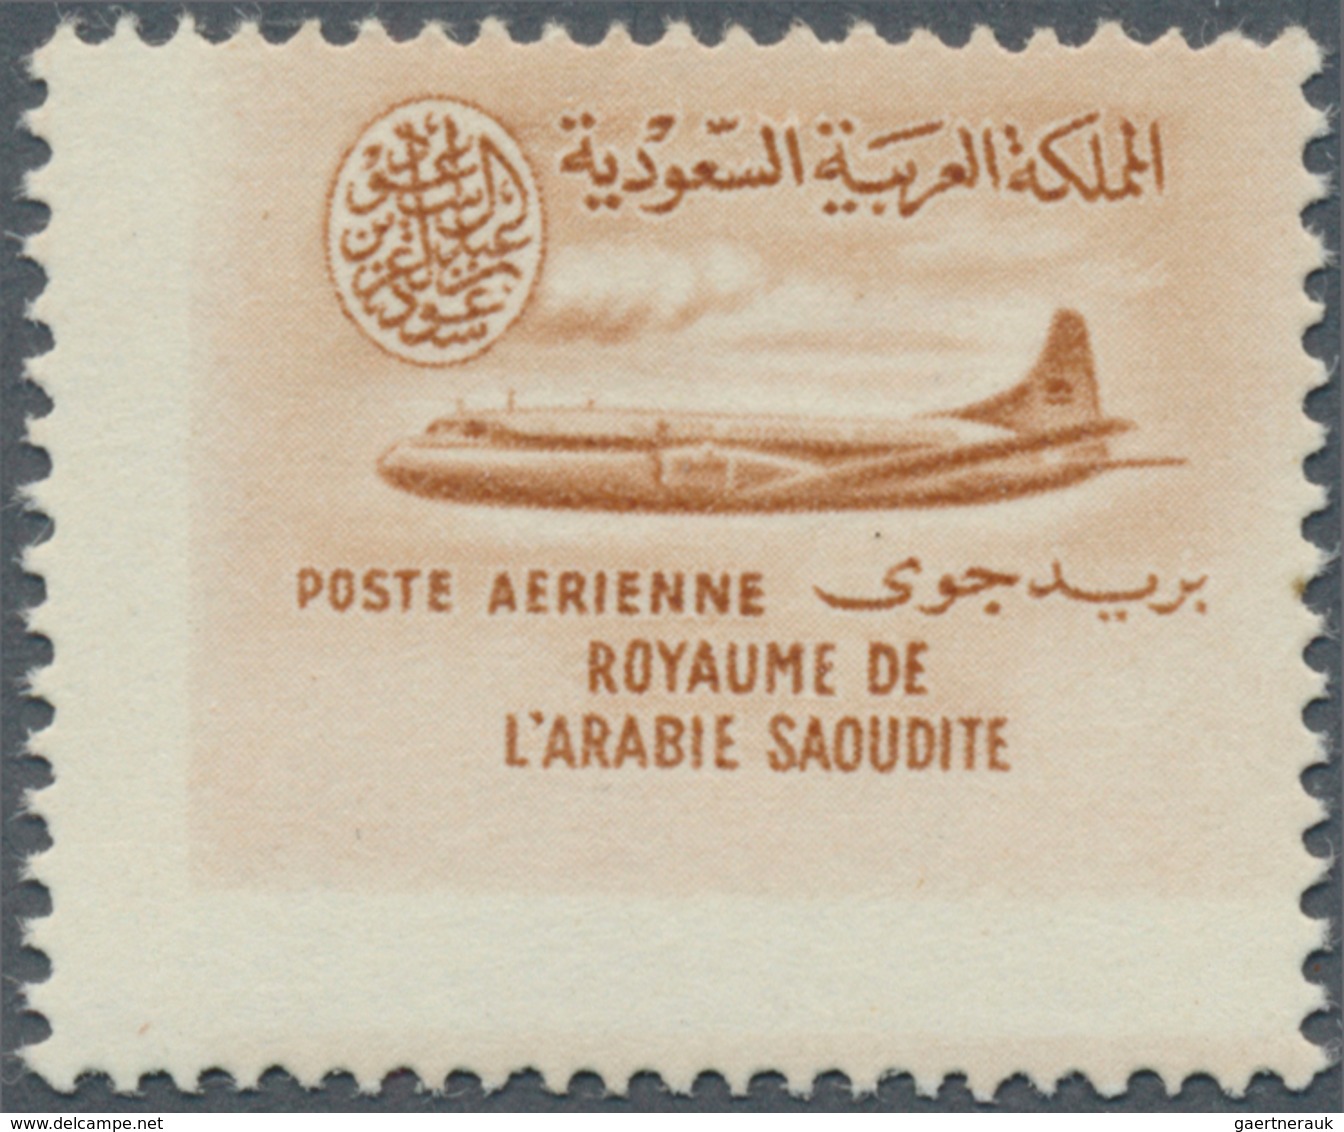 Saudi-Arabien: 1962, Vickers Viscount Air Mail 15 P., Error Blue Colour Missing, Mint Never Hinged M - Saudi-Arabien